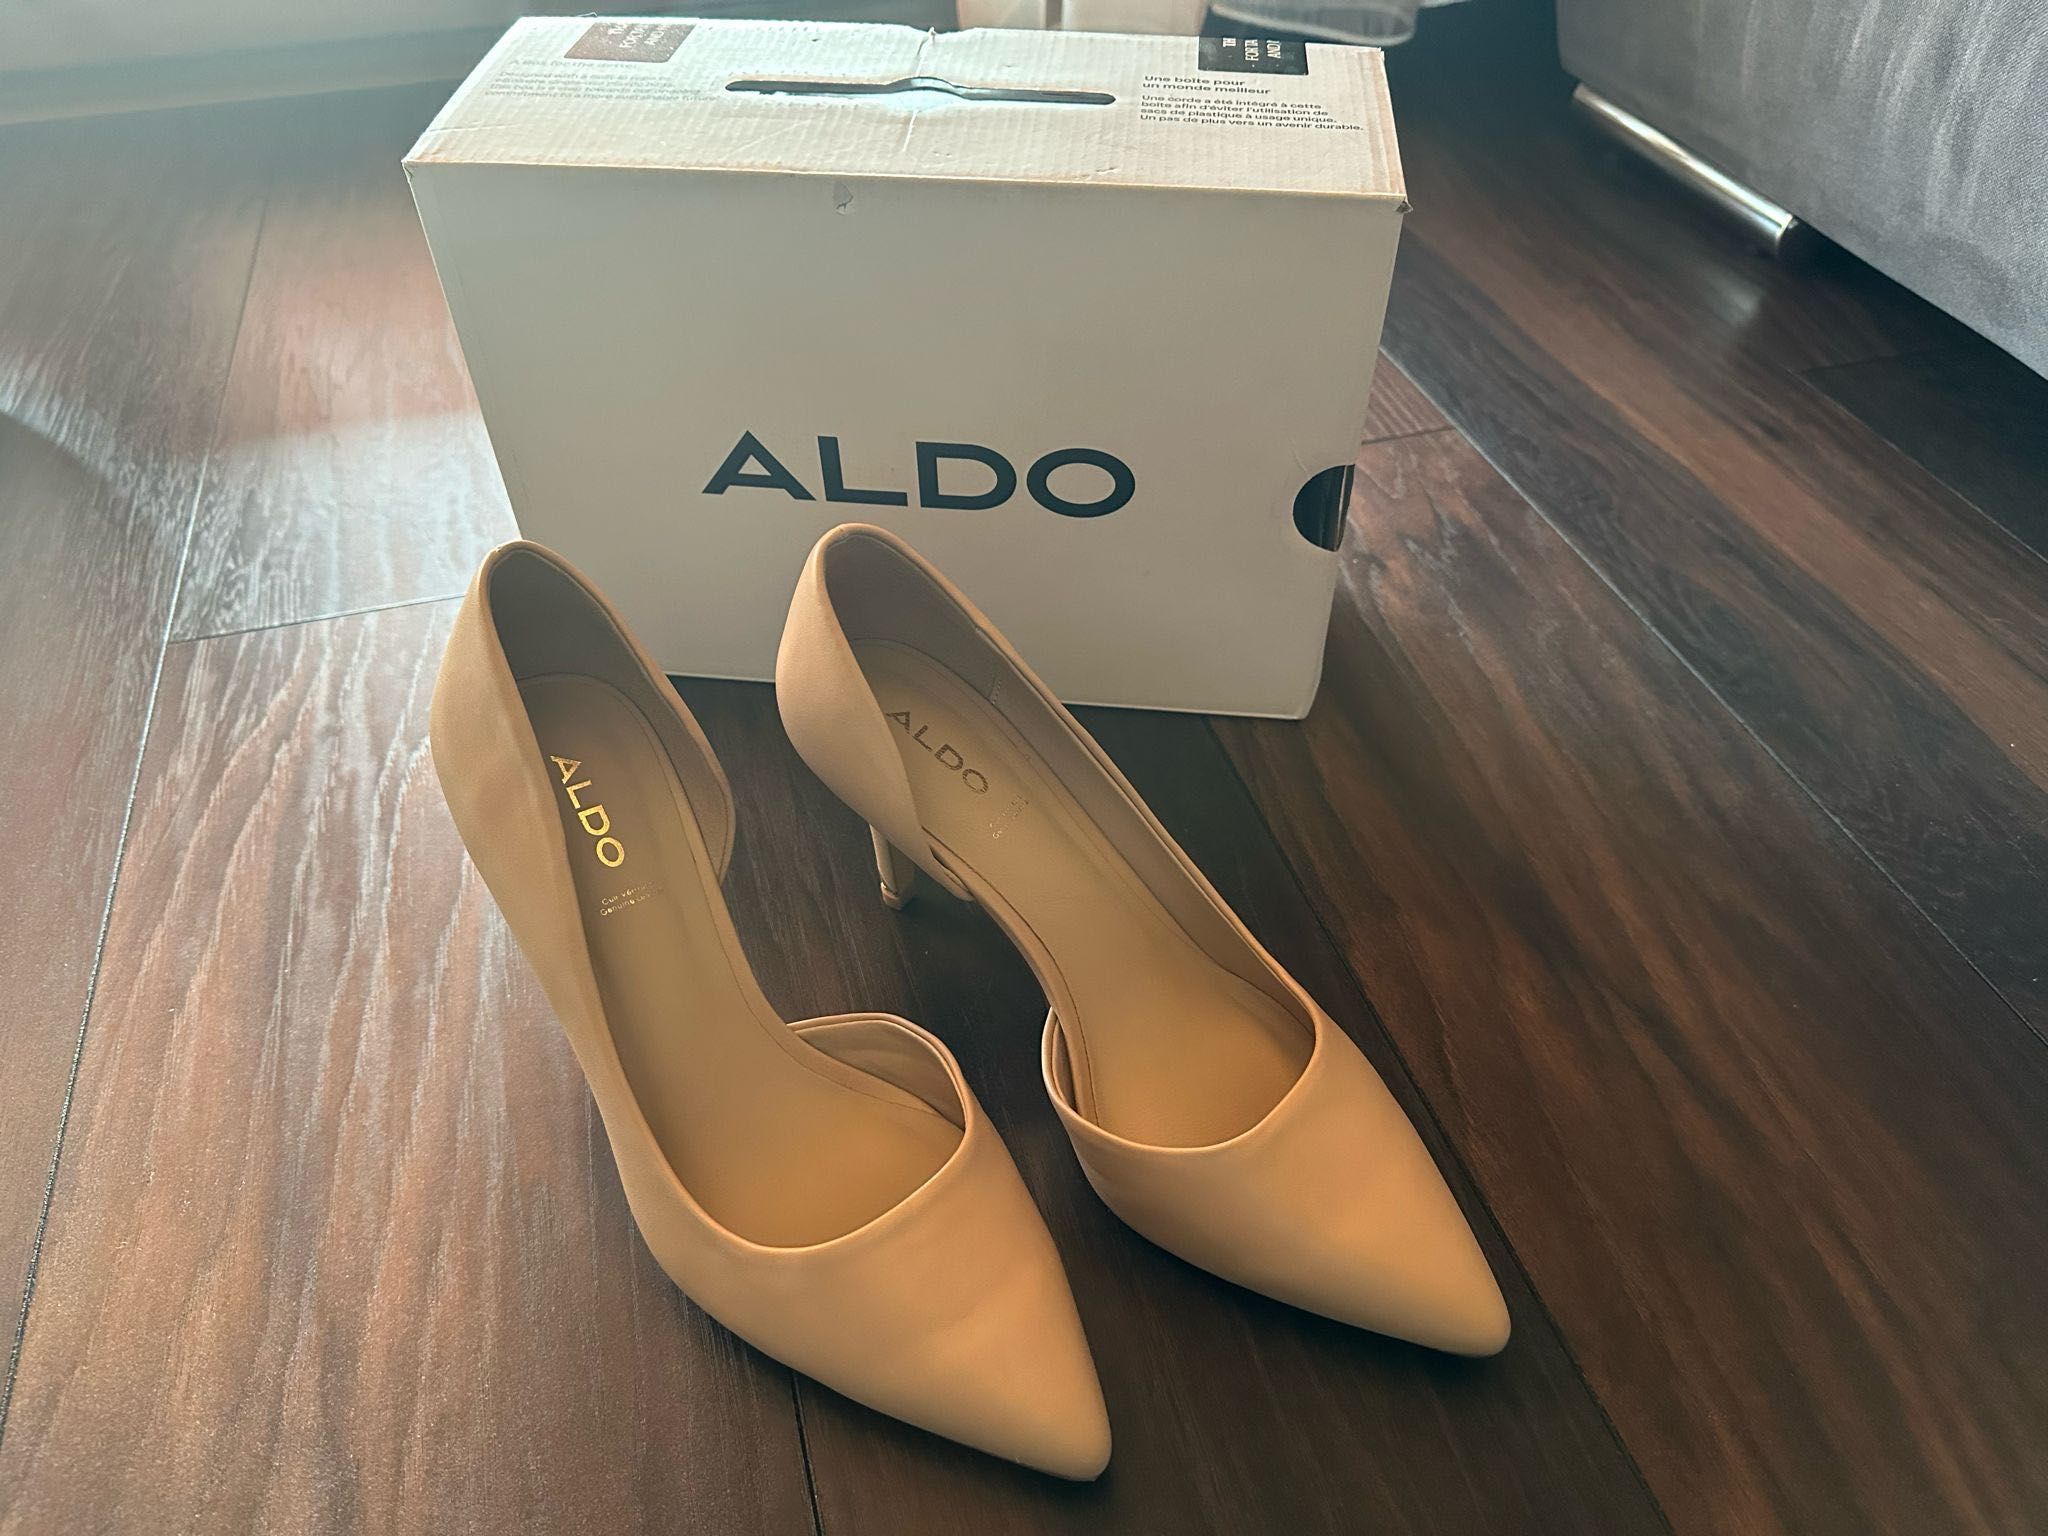 Pantofi dama- Aldo, 39, bej (piele naturala)